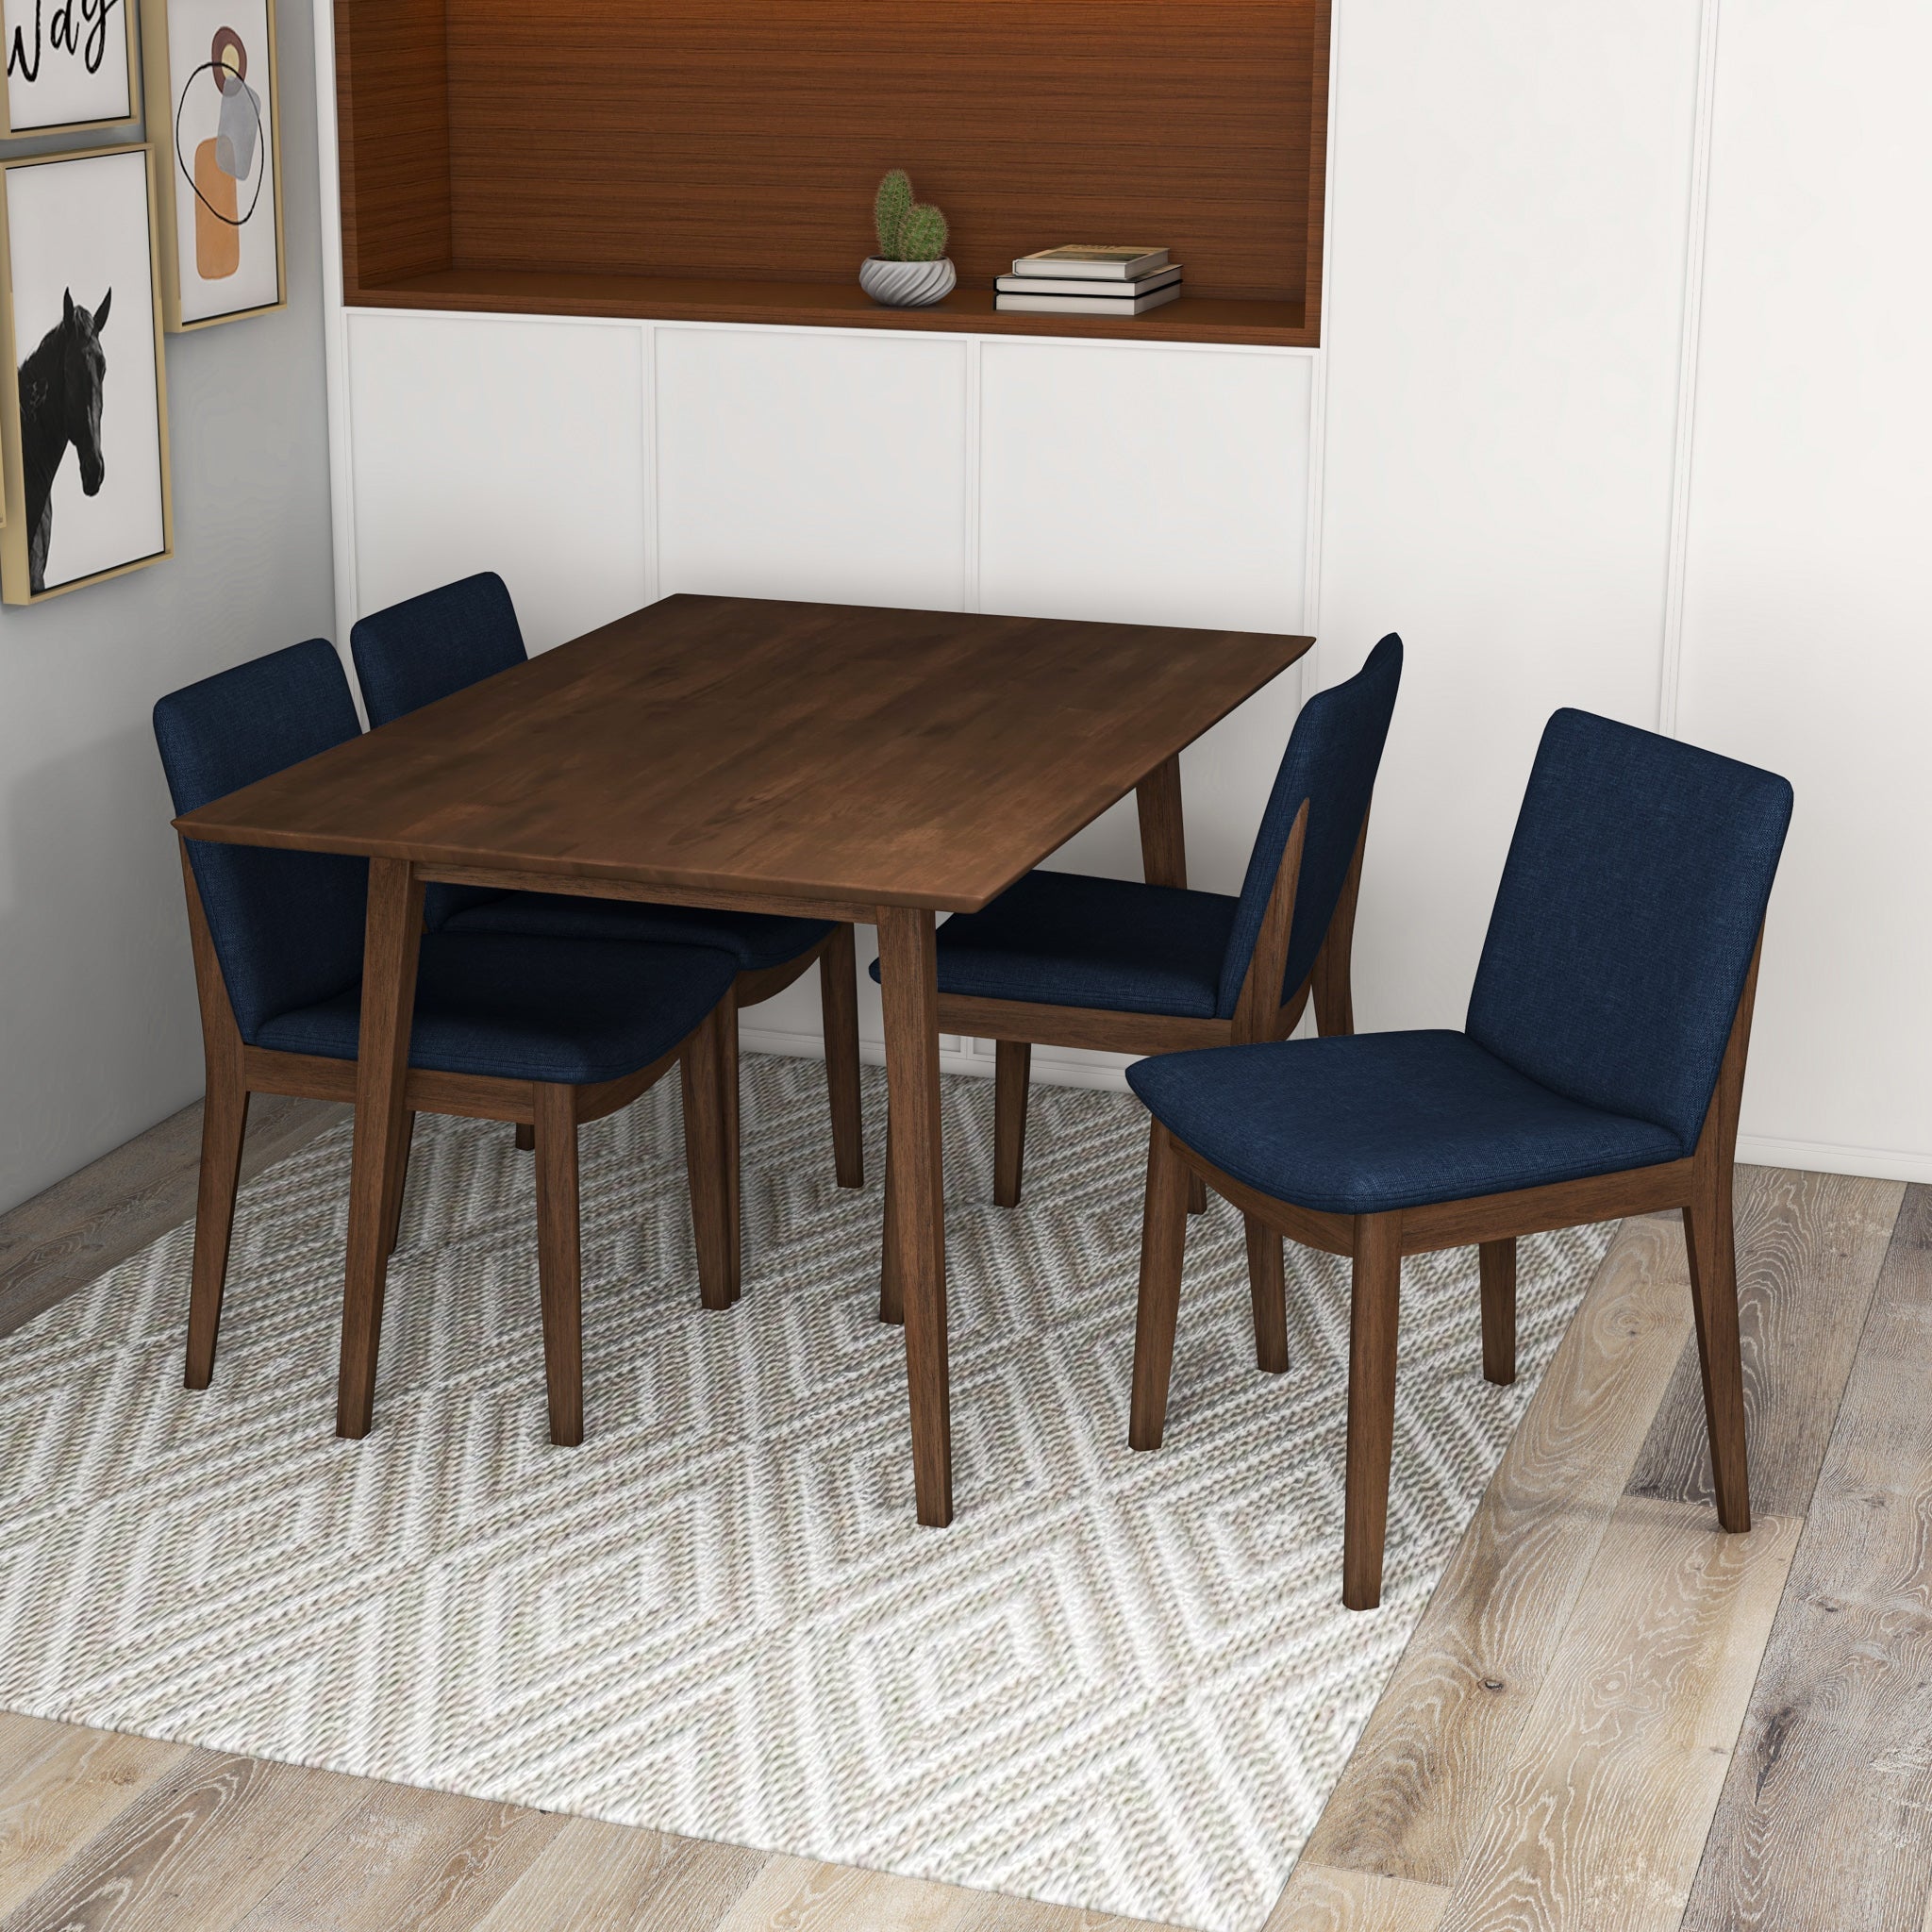 Adira (Small - Walnut) Dining Set with 4 Virginia (Dark Blue) Dining Chairs